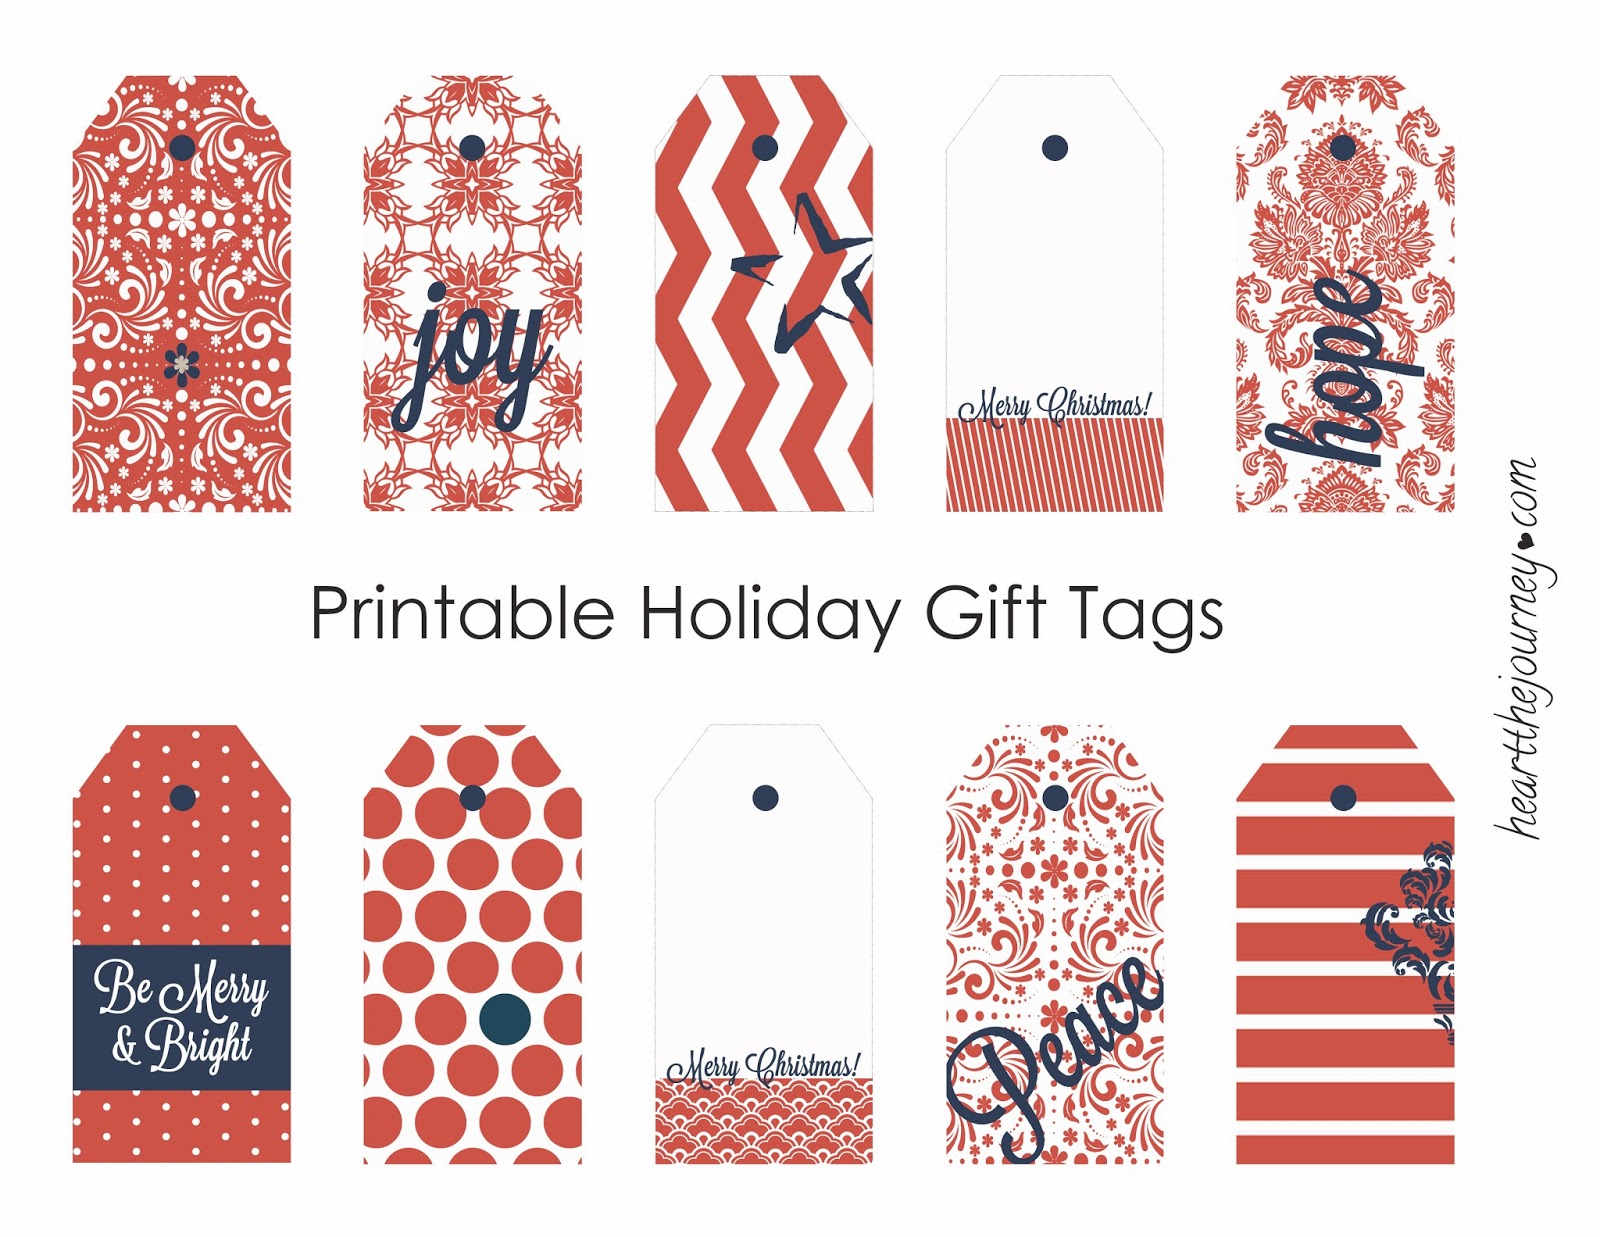 heartthejourney-diy-free-printable-holiday-gift-tags